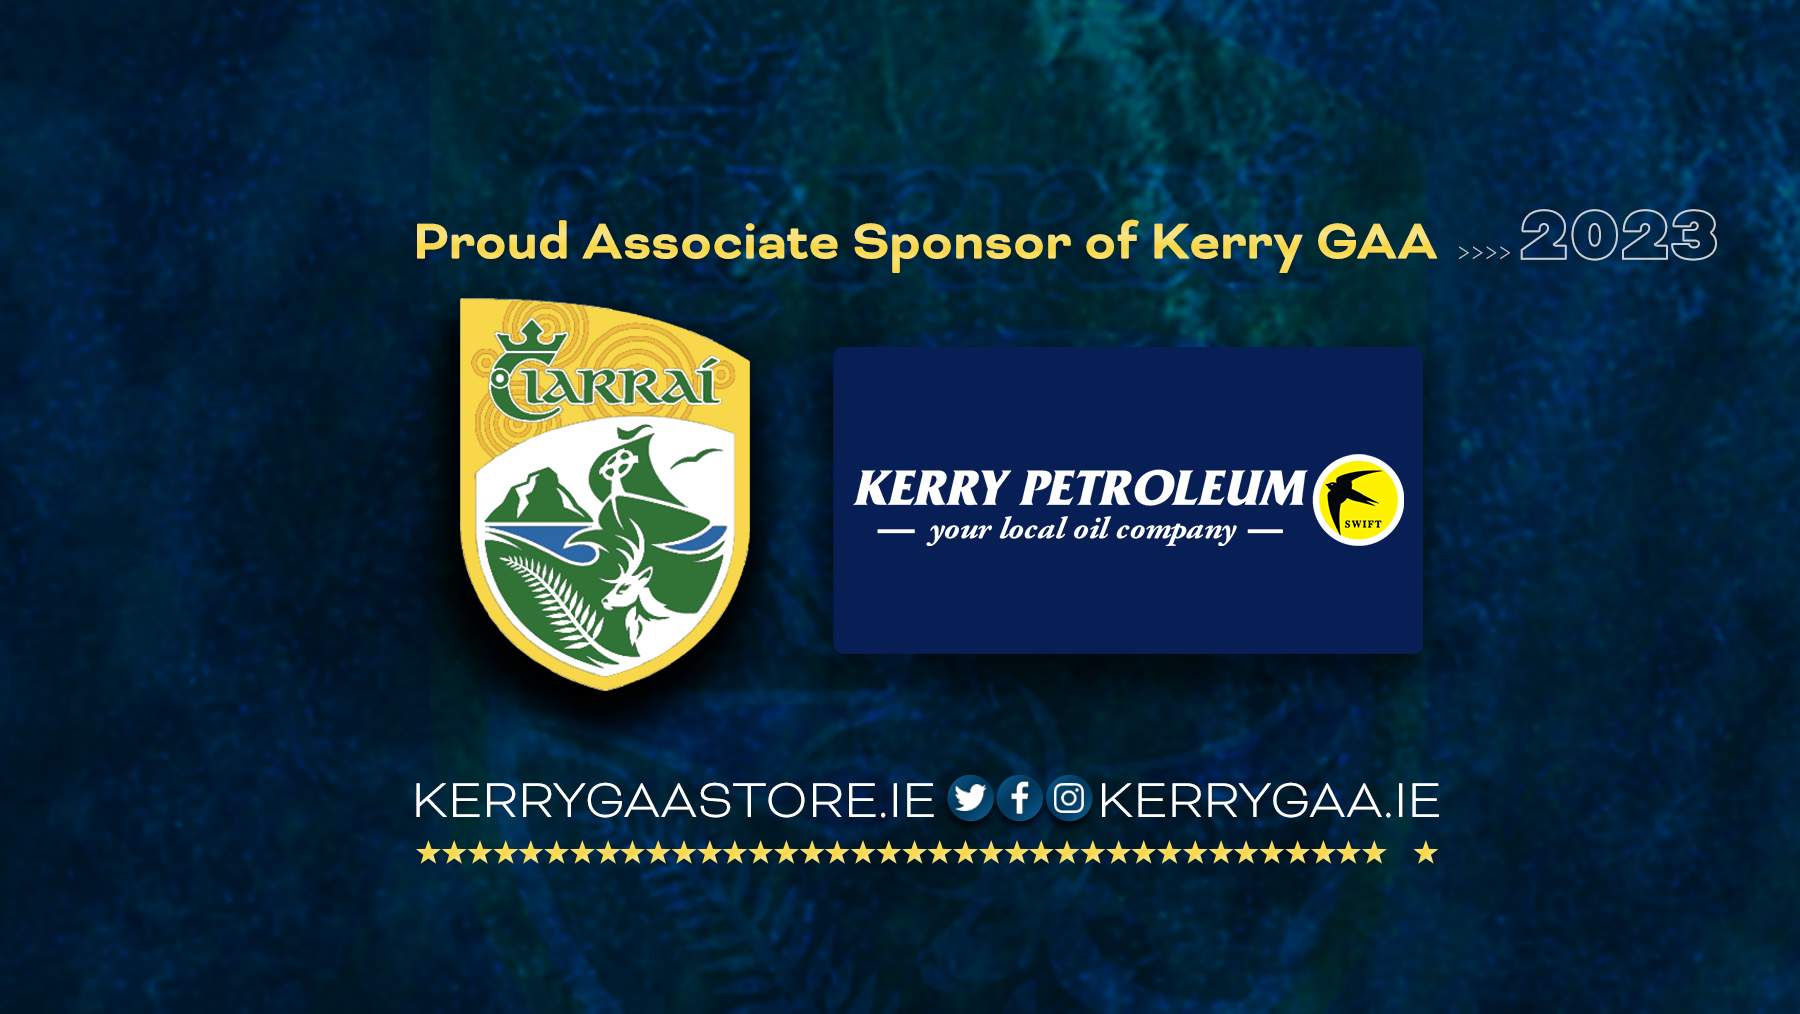 Kerry Petroleum Club Championships Get Underway This Weekend